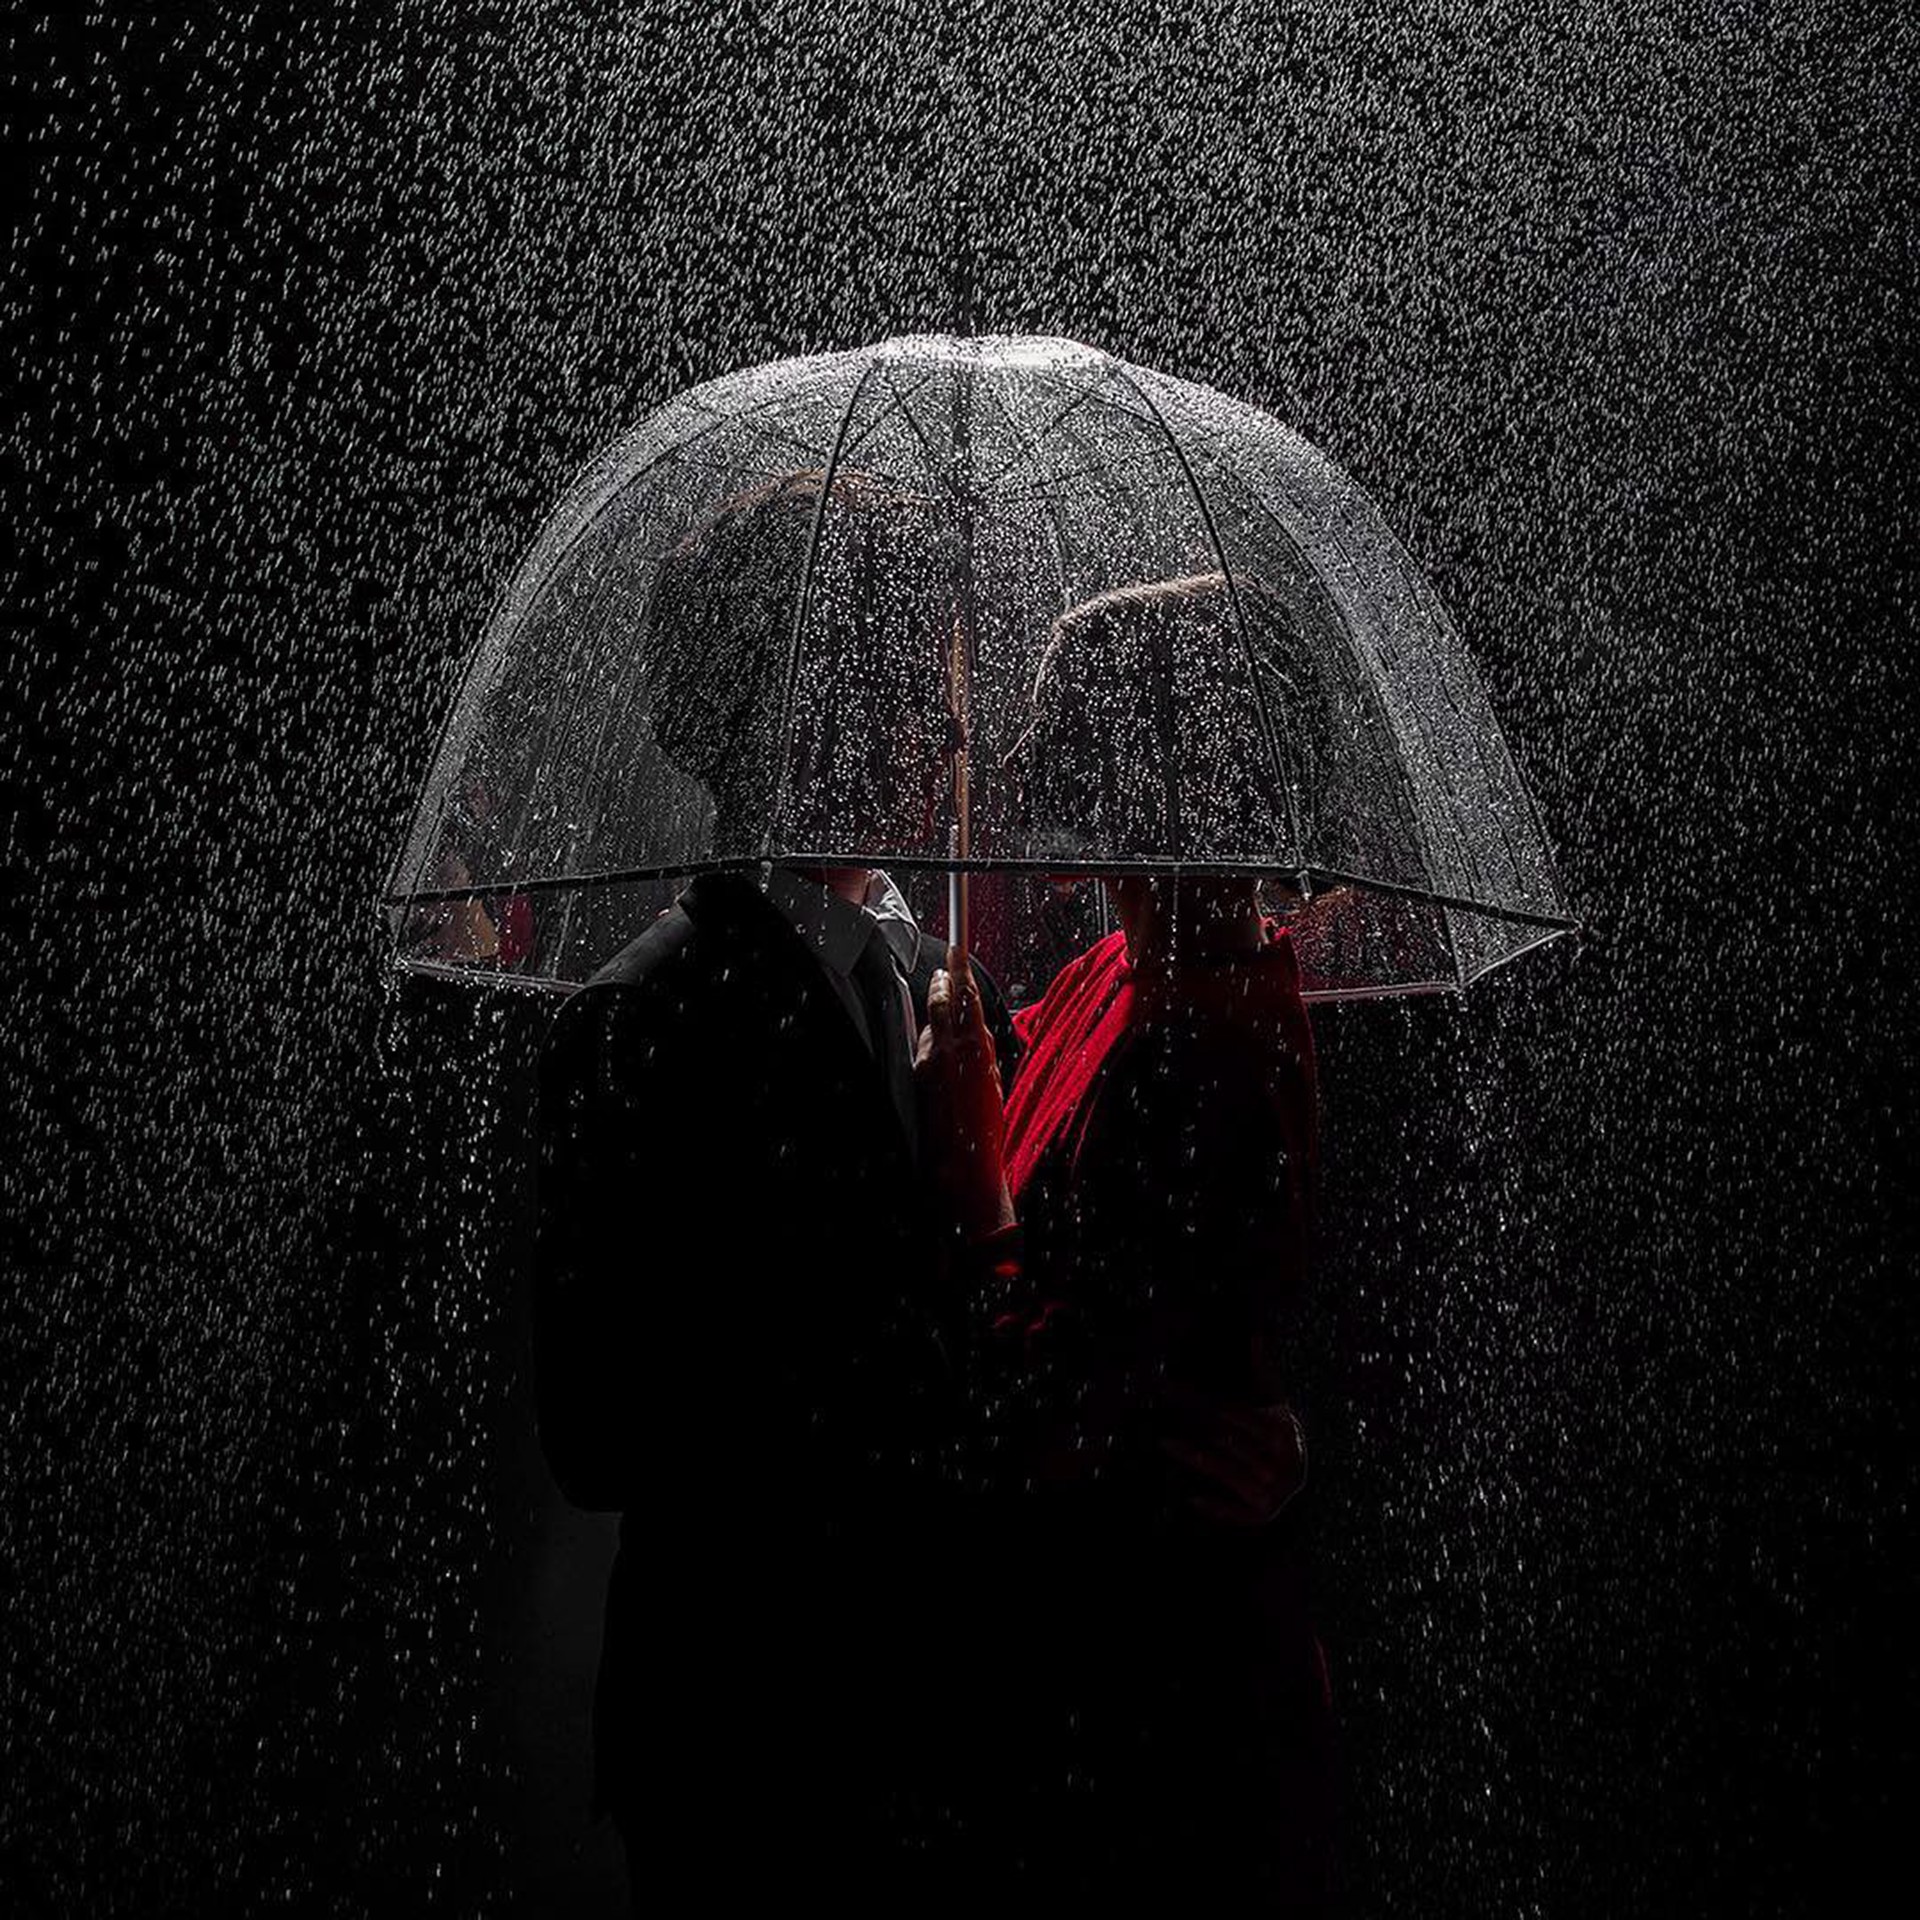 Under The Rain by Tyler Shields